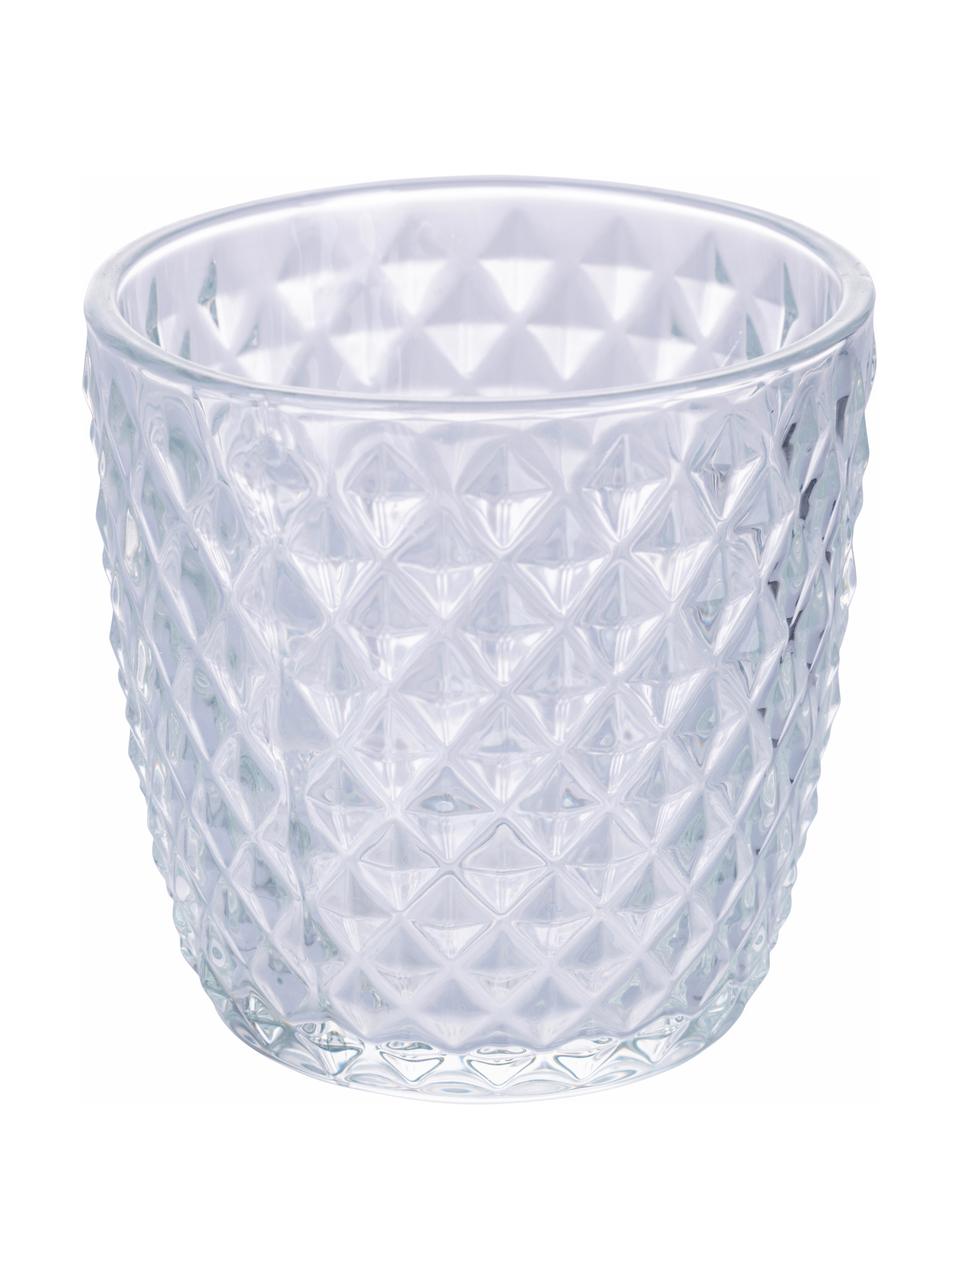 Set de vasos con relieves Geometry, 6 uds., Vidrio, Transparente, Ø 9 x Al 9 cm, 380 ml